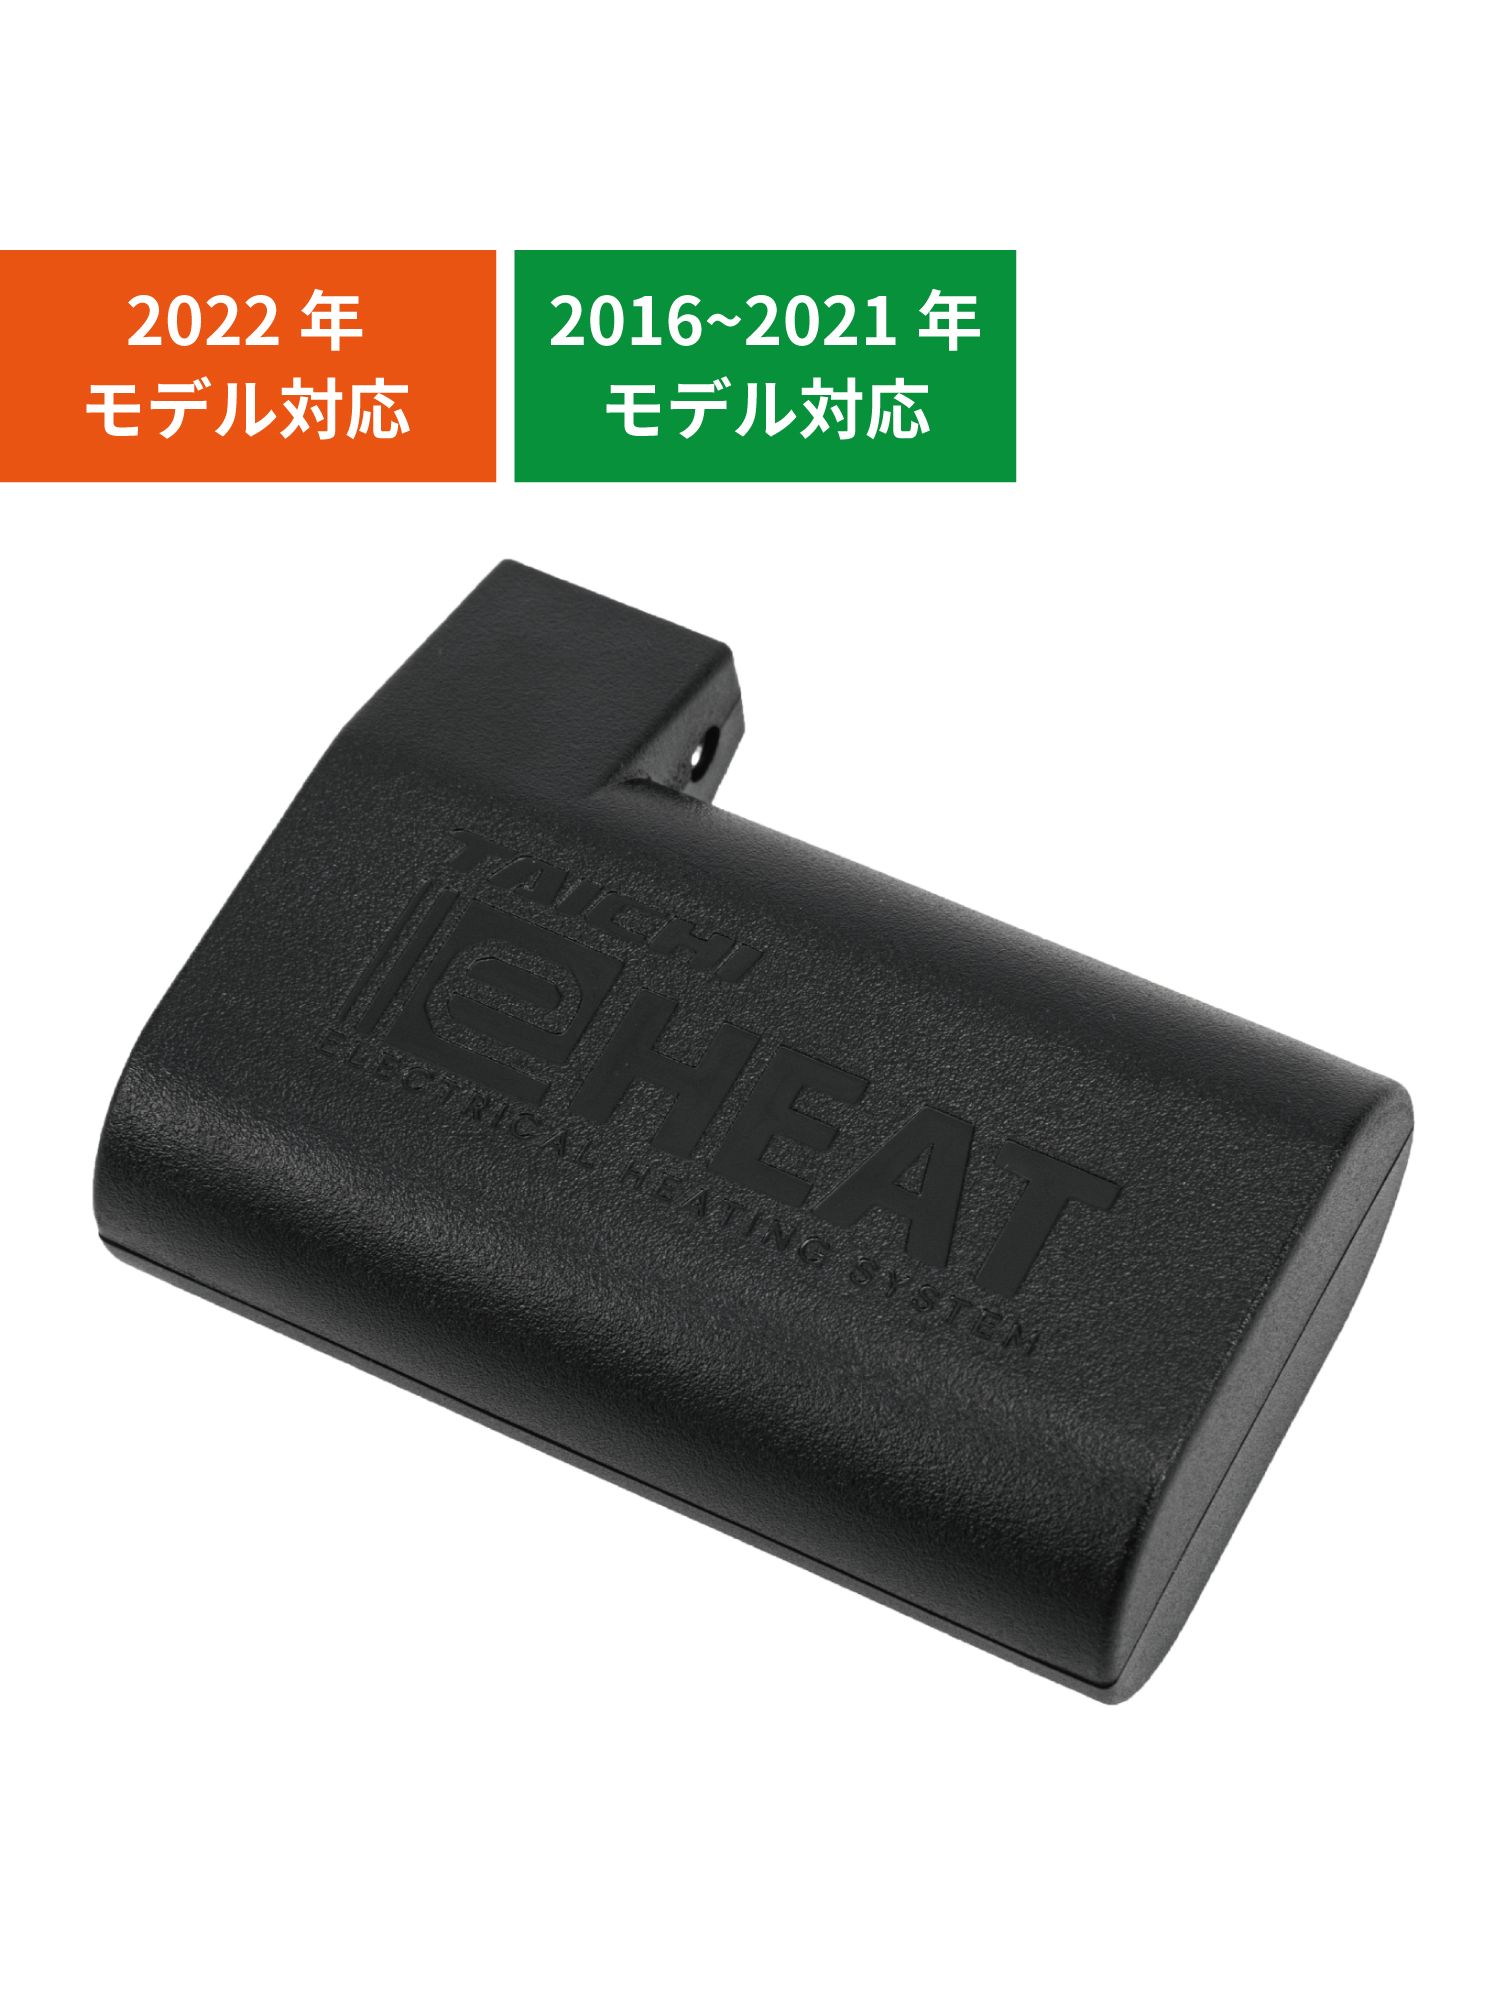 RSP065 | e-HEAT 7.2V Spare battery for e-HEAT/ Jacket/Glove/Vest(1pc.)